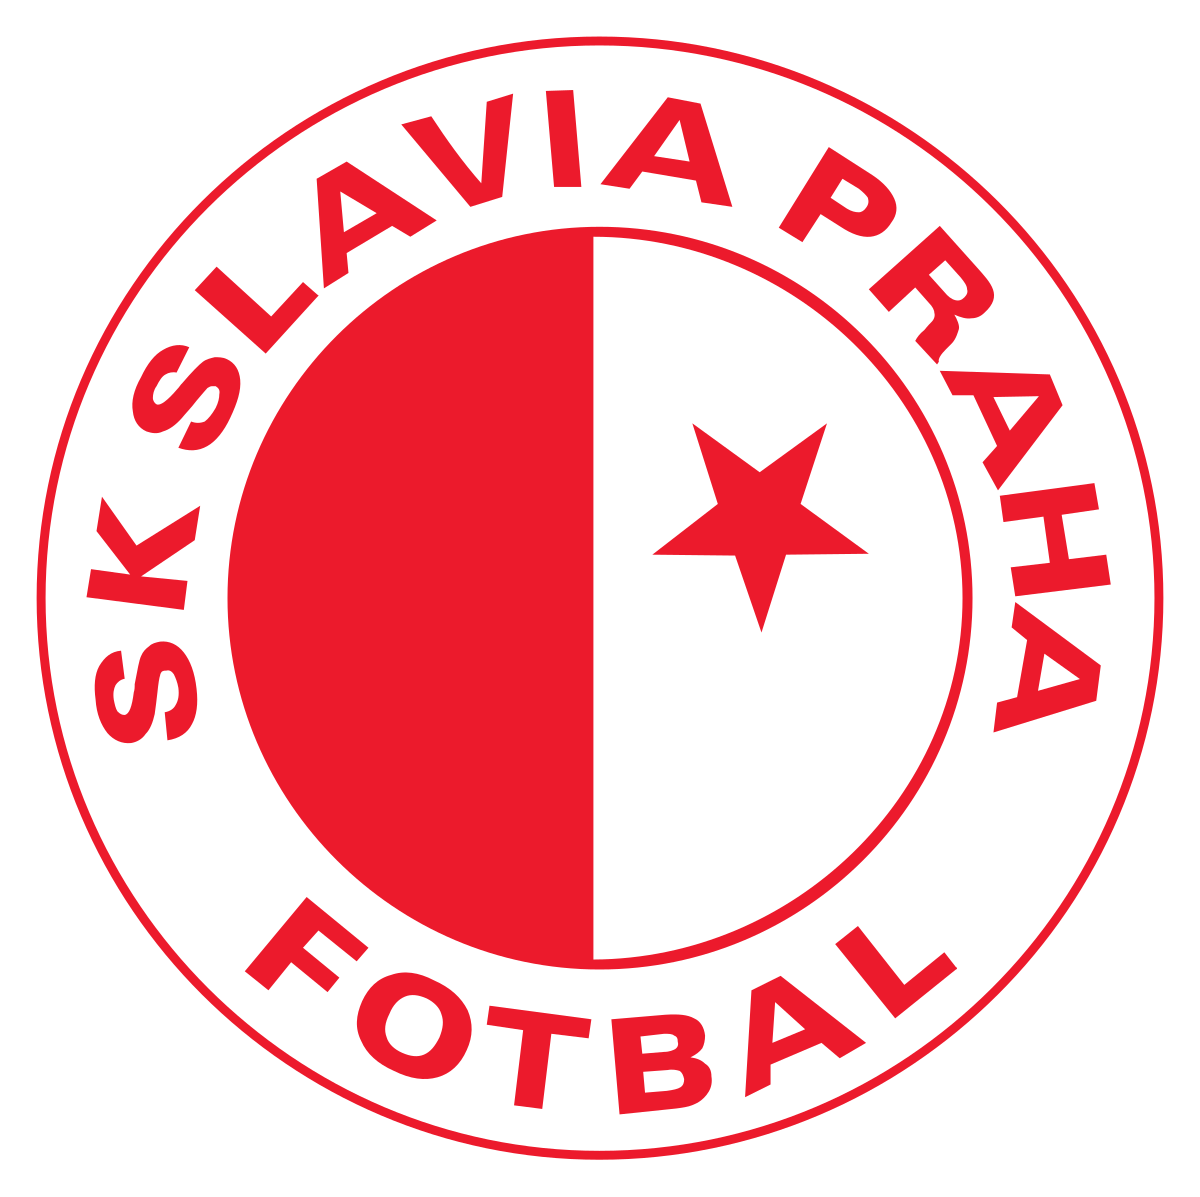 File:SK Slavia Praha Club Museum 02.jpg - Wikimedia Commons